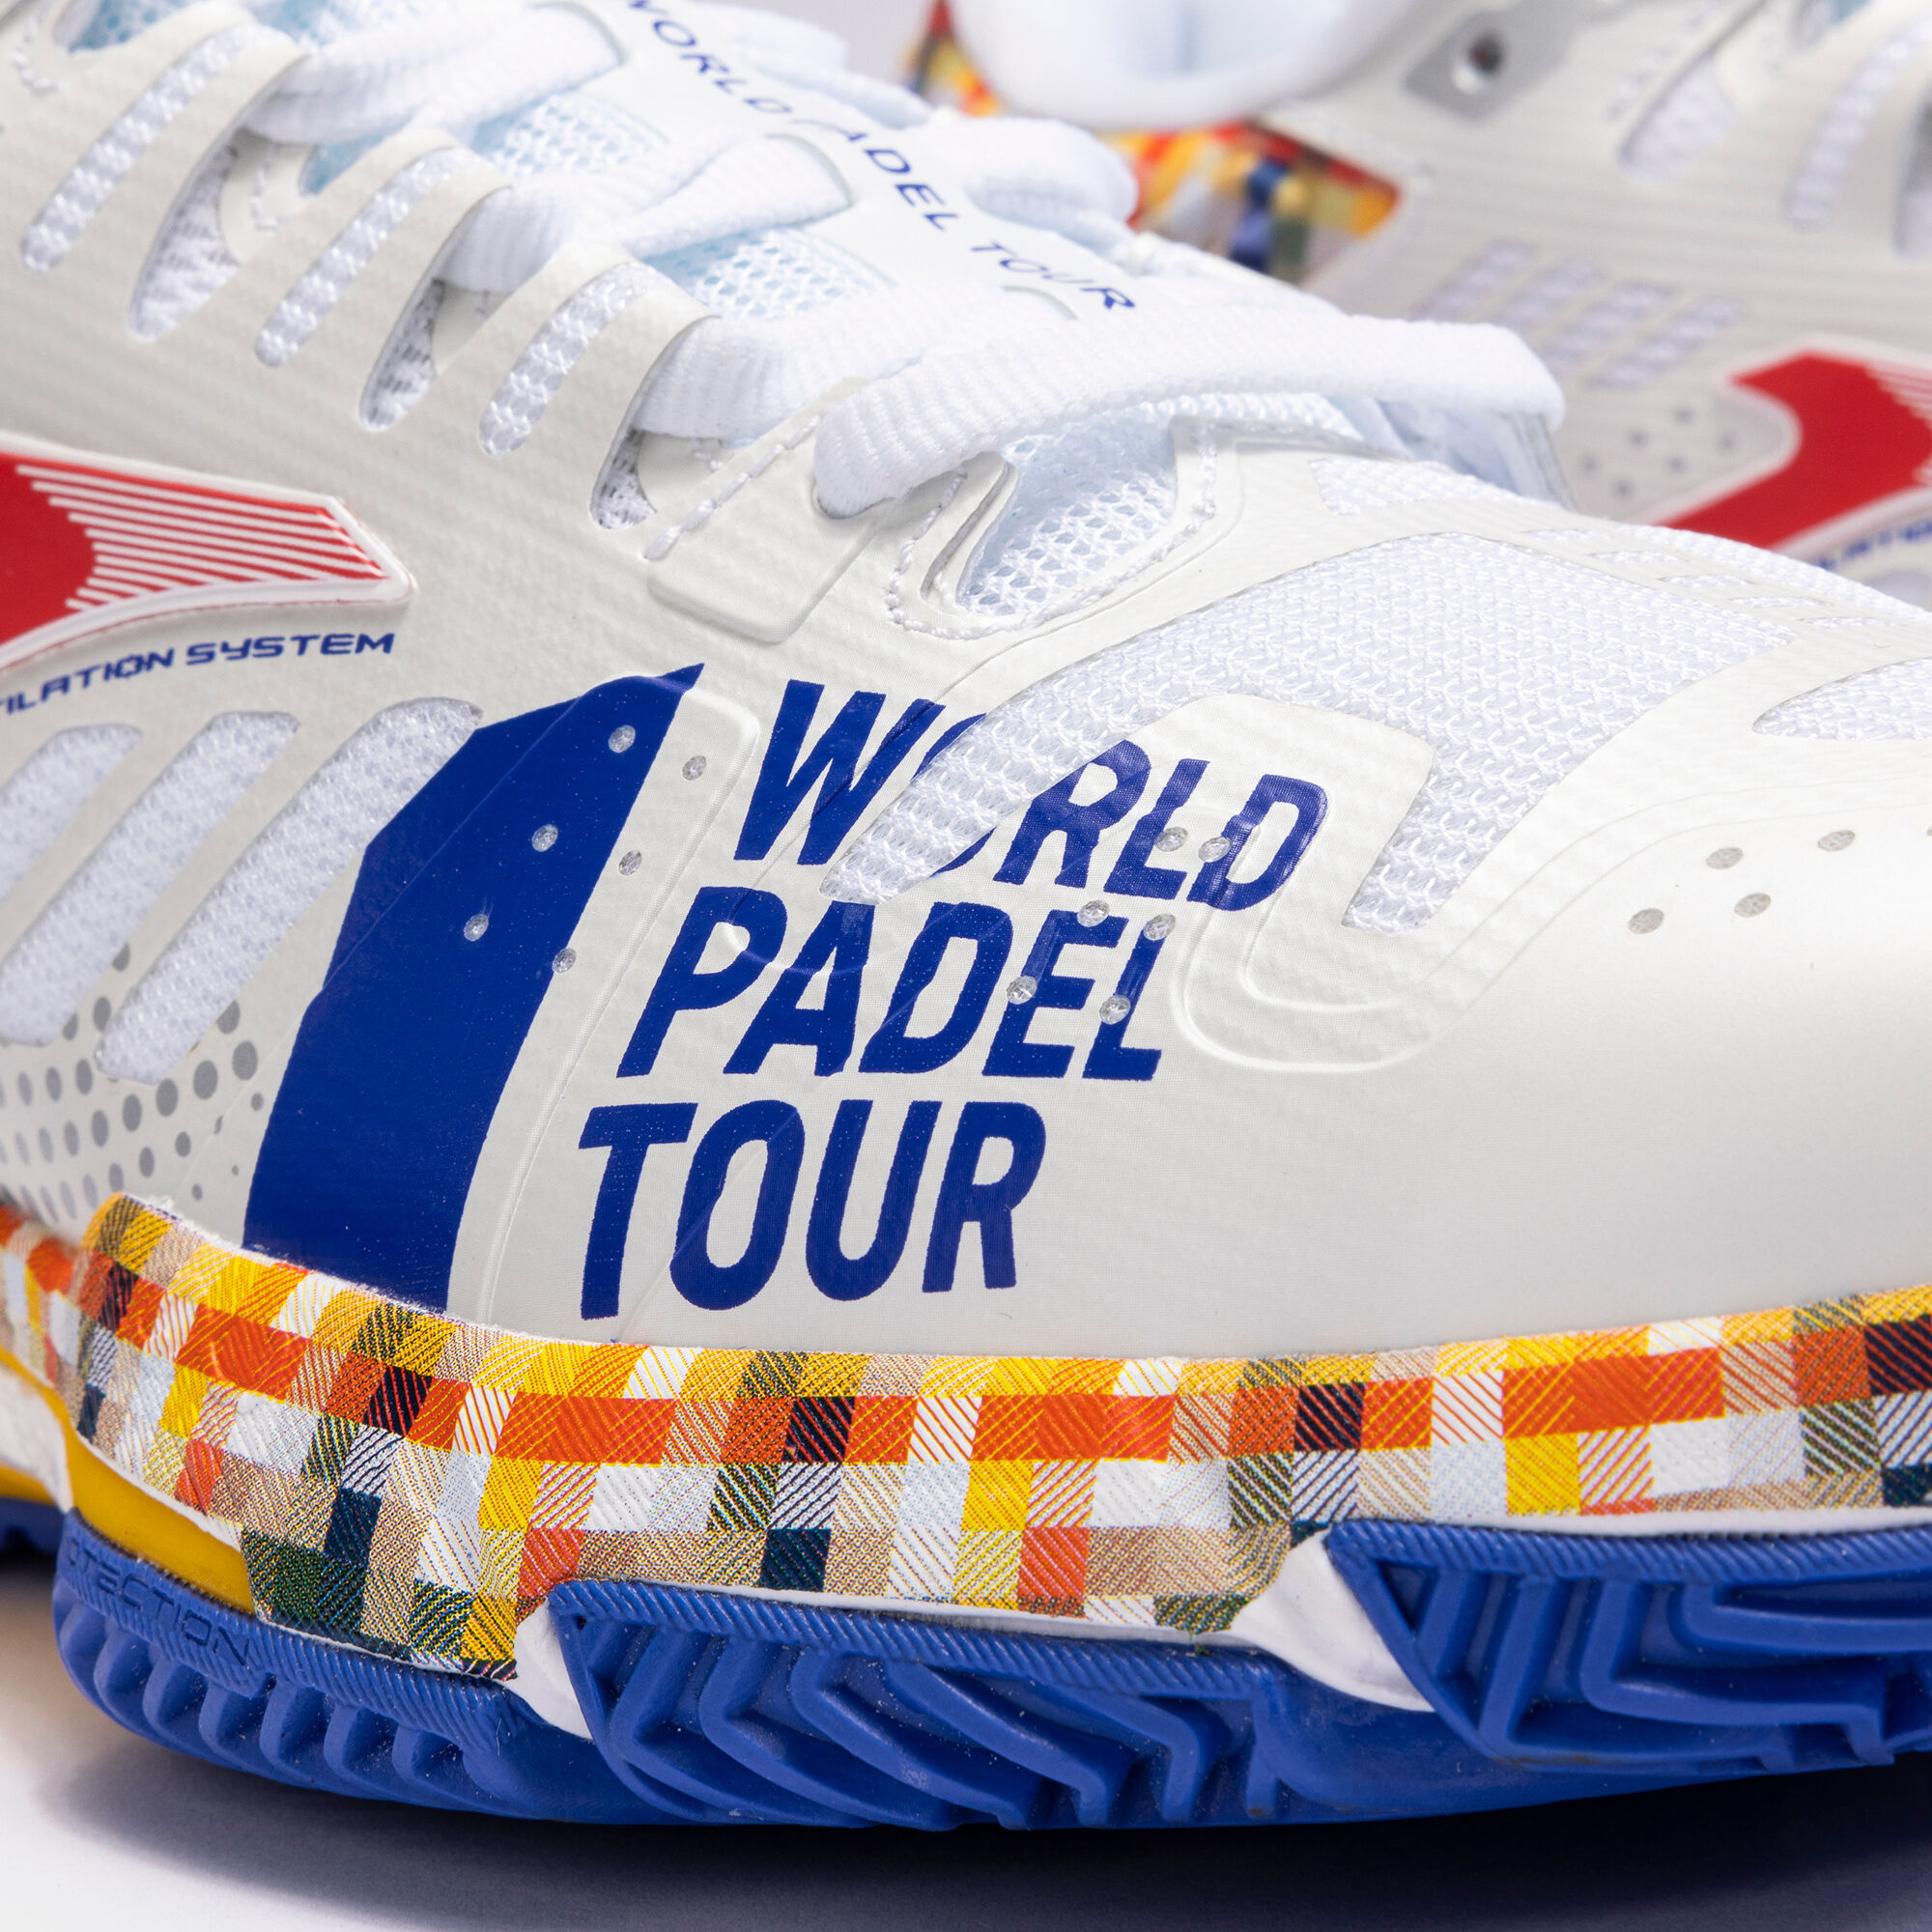 Shoes T.Slam 23 World Padel Tour - Wpt clay man white royal blue